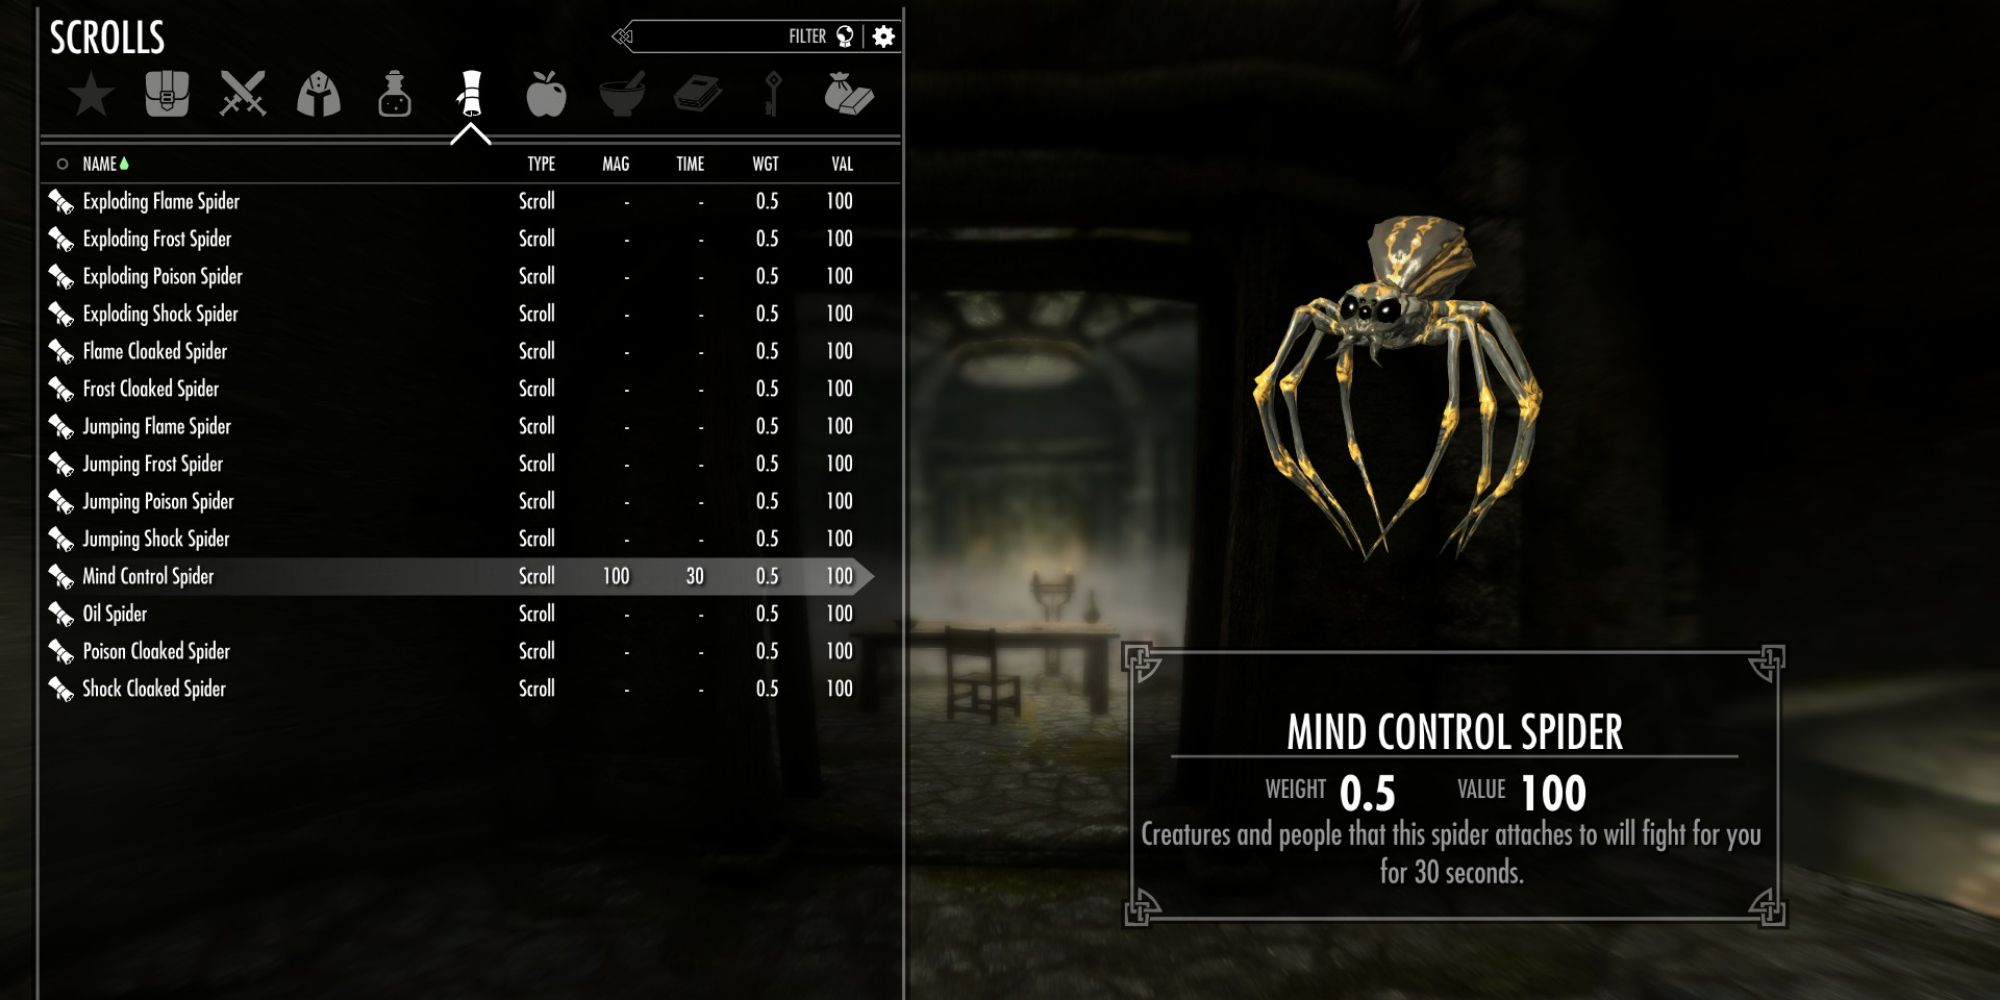 Skyrim mind control spider scroll inventory